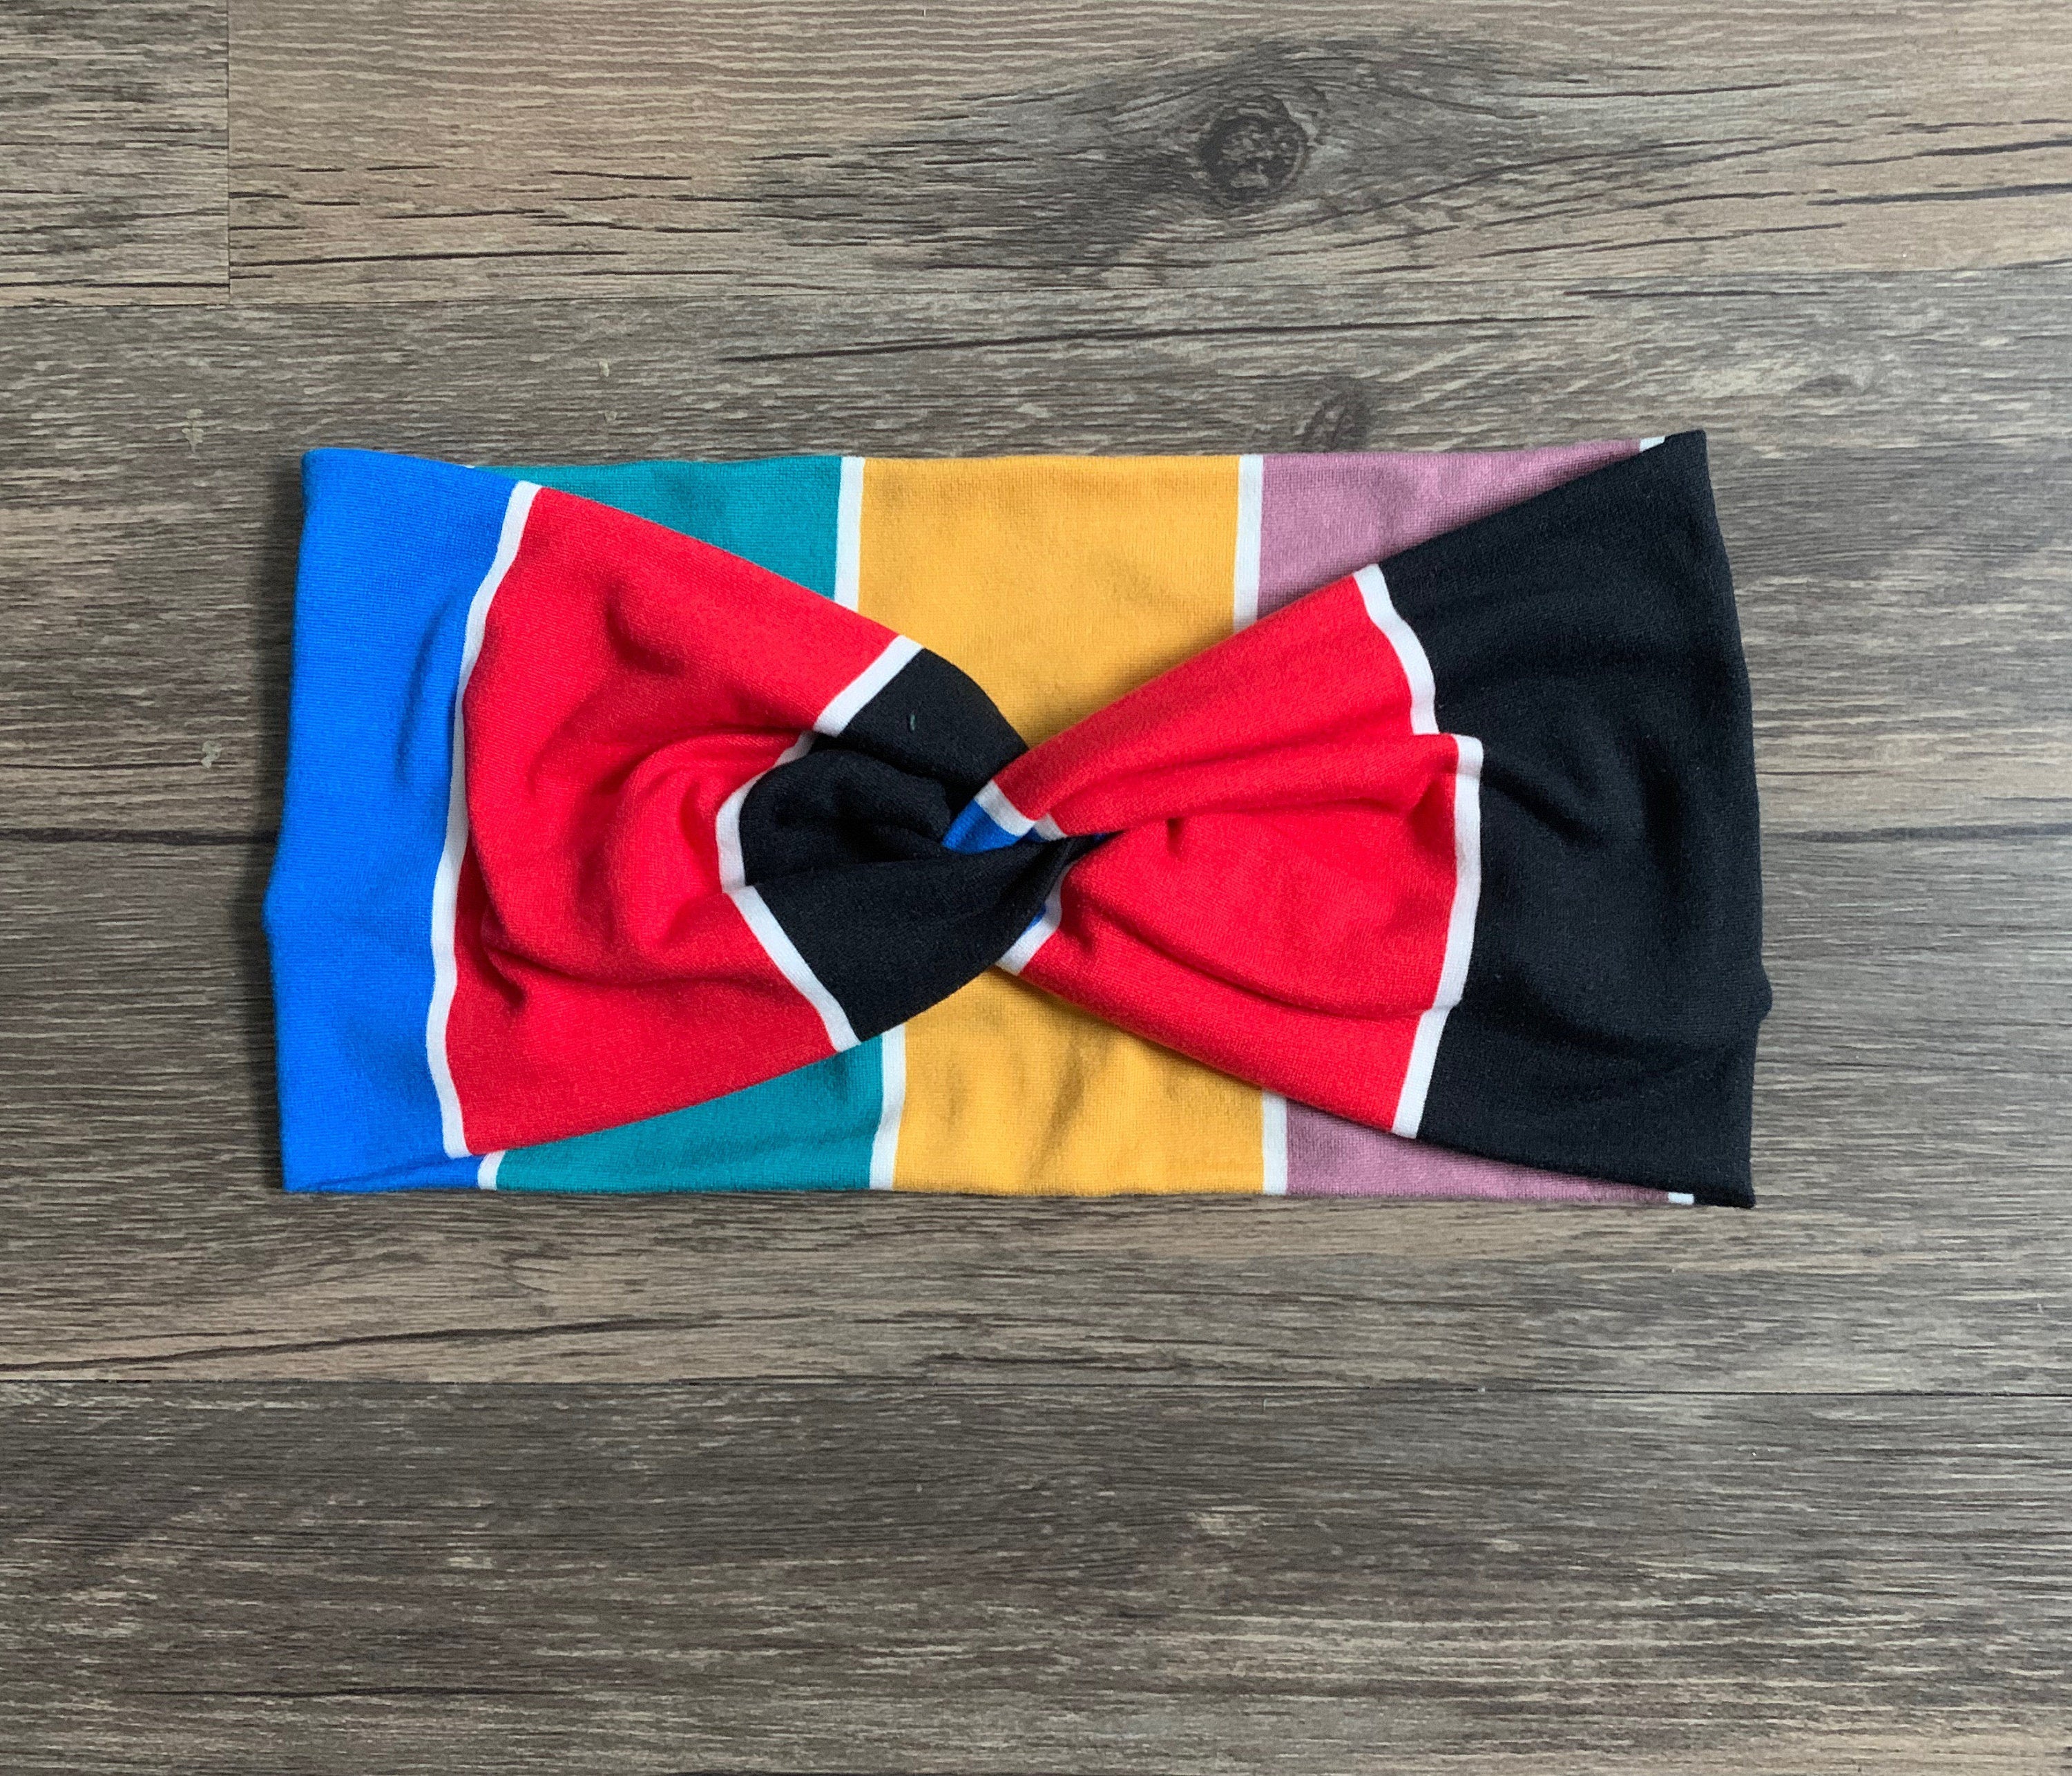 Color block turban, colorful baby headband, turban headband, knit headband, yoga headband, gift for girl, teacher gift, stretchy headband